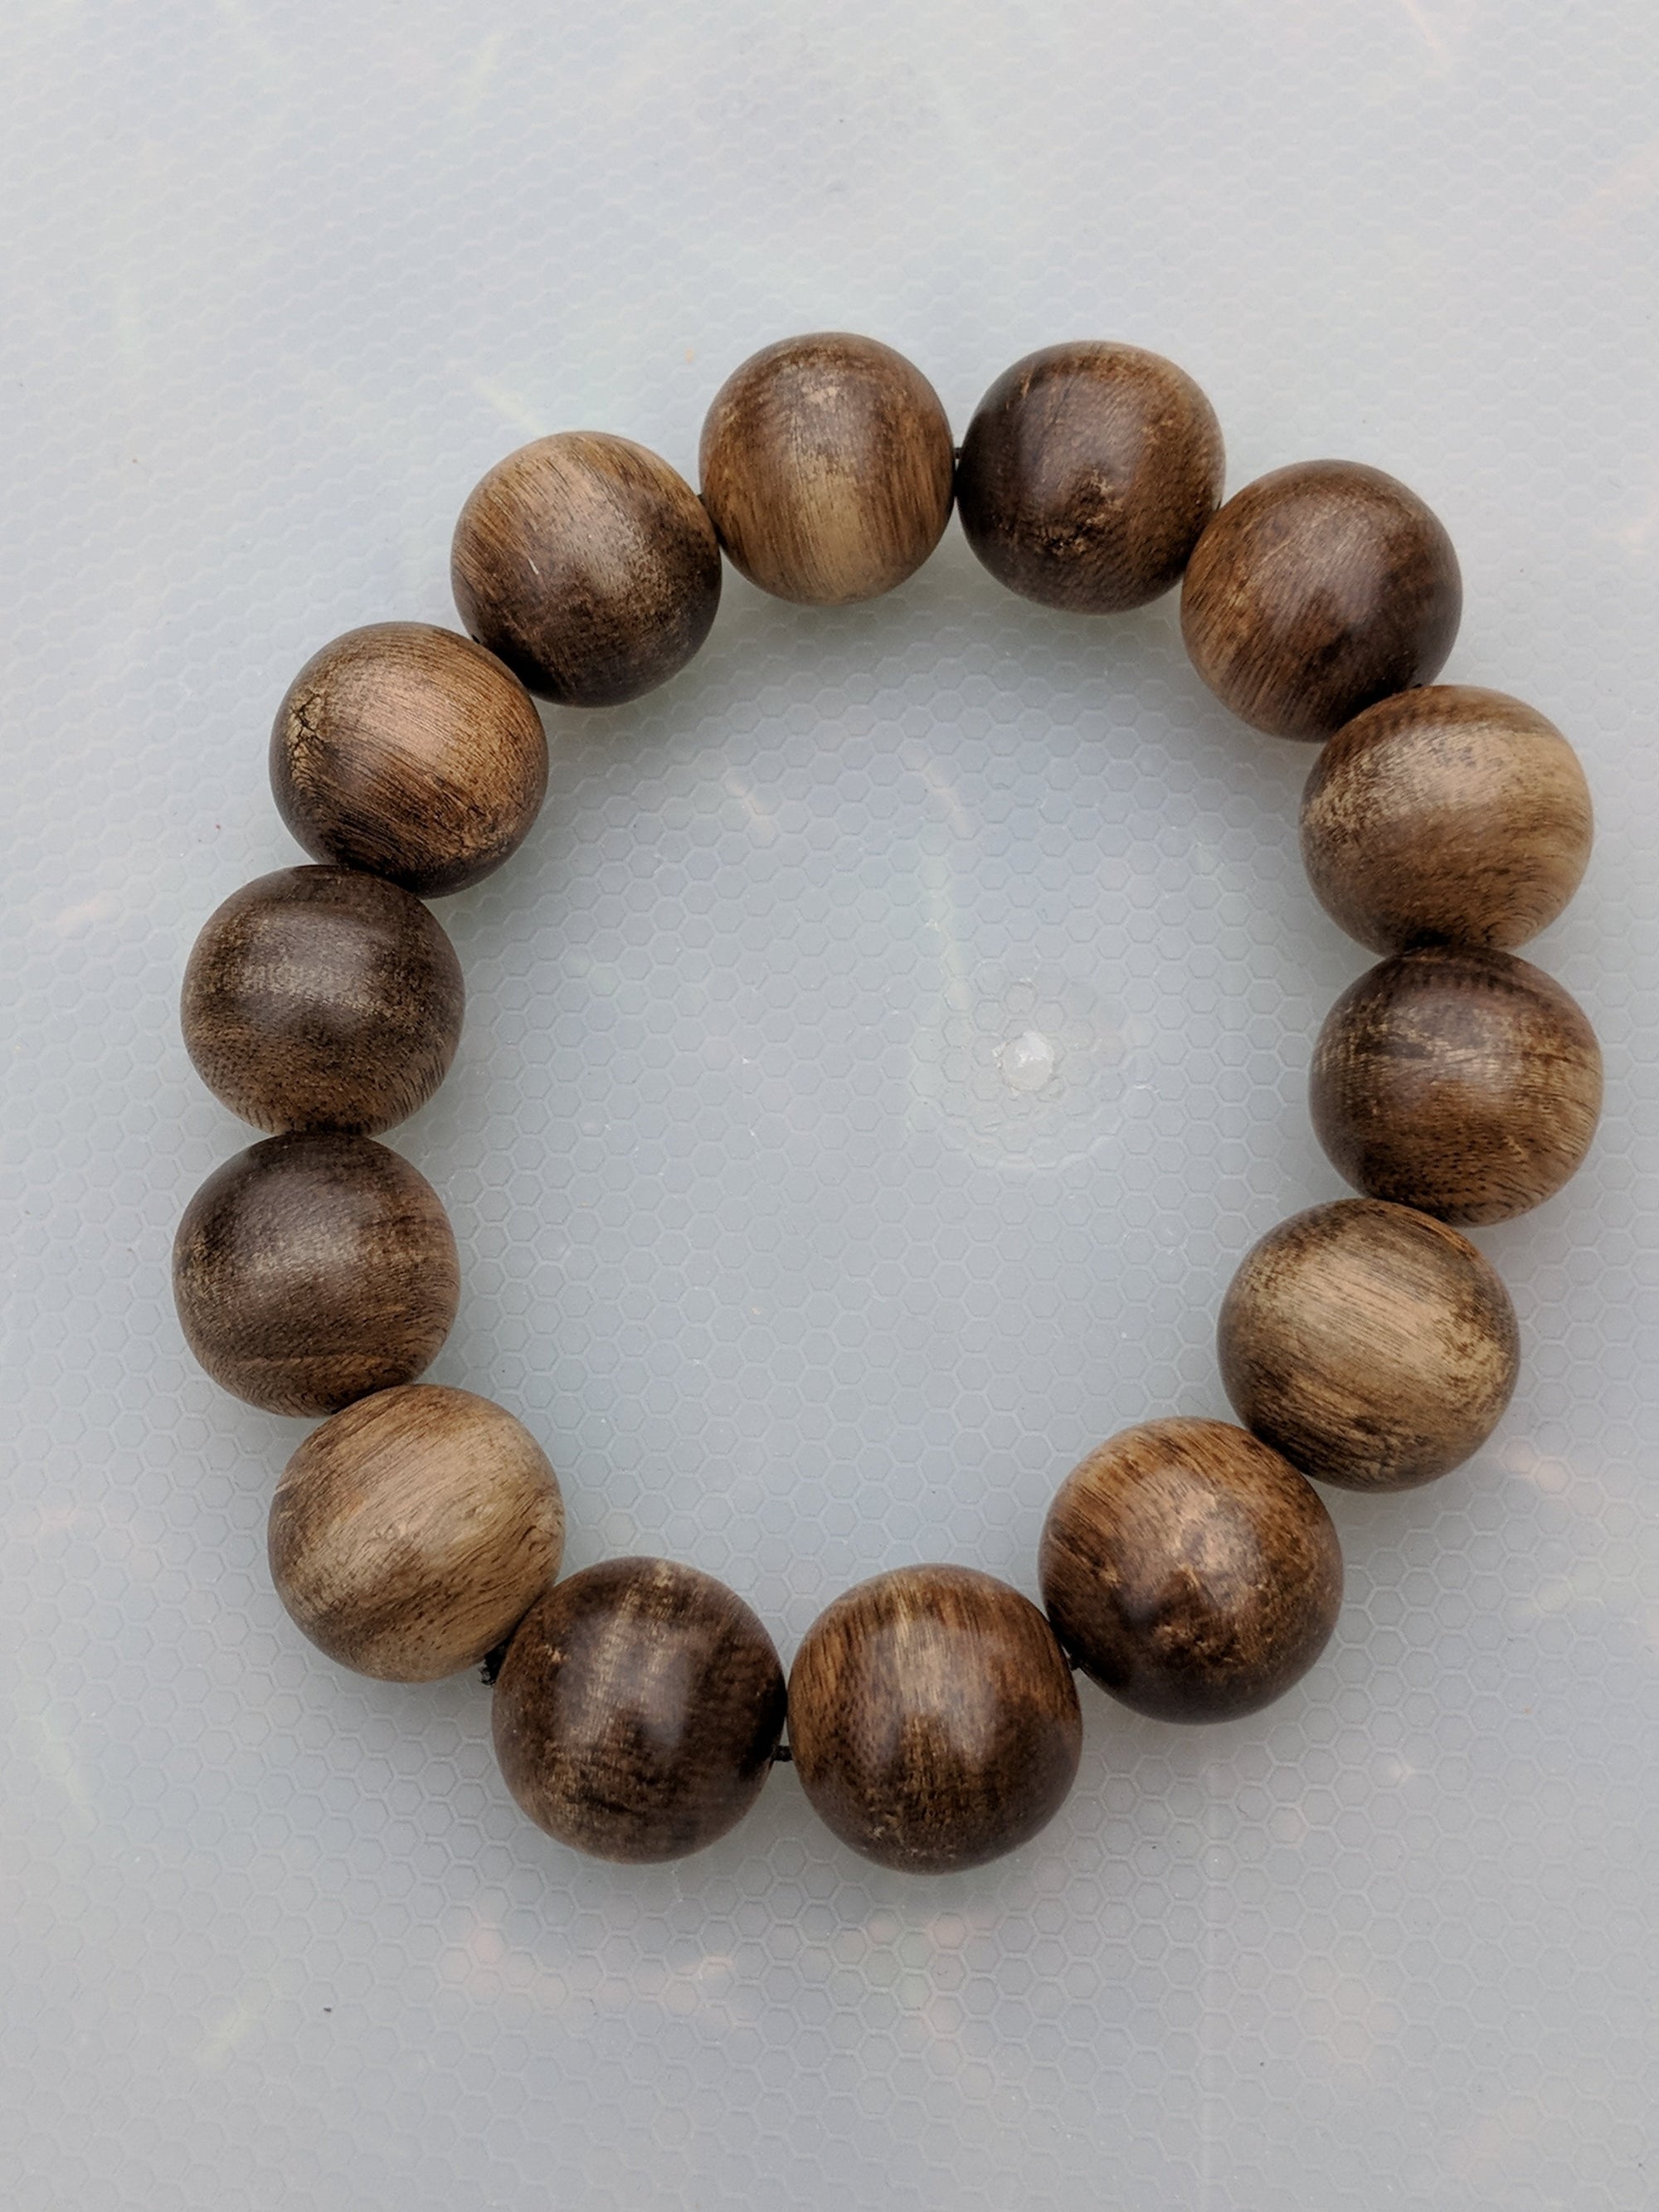 Wild Agarwood Bracelet Borneo 28g sandpaper polished 14 beads 16mm -